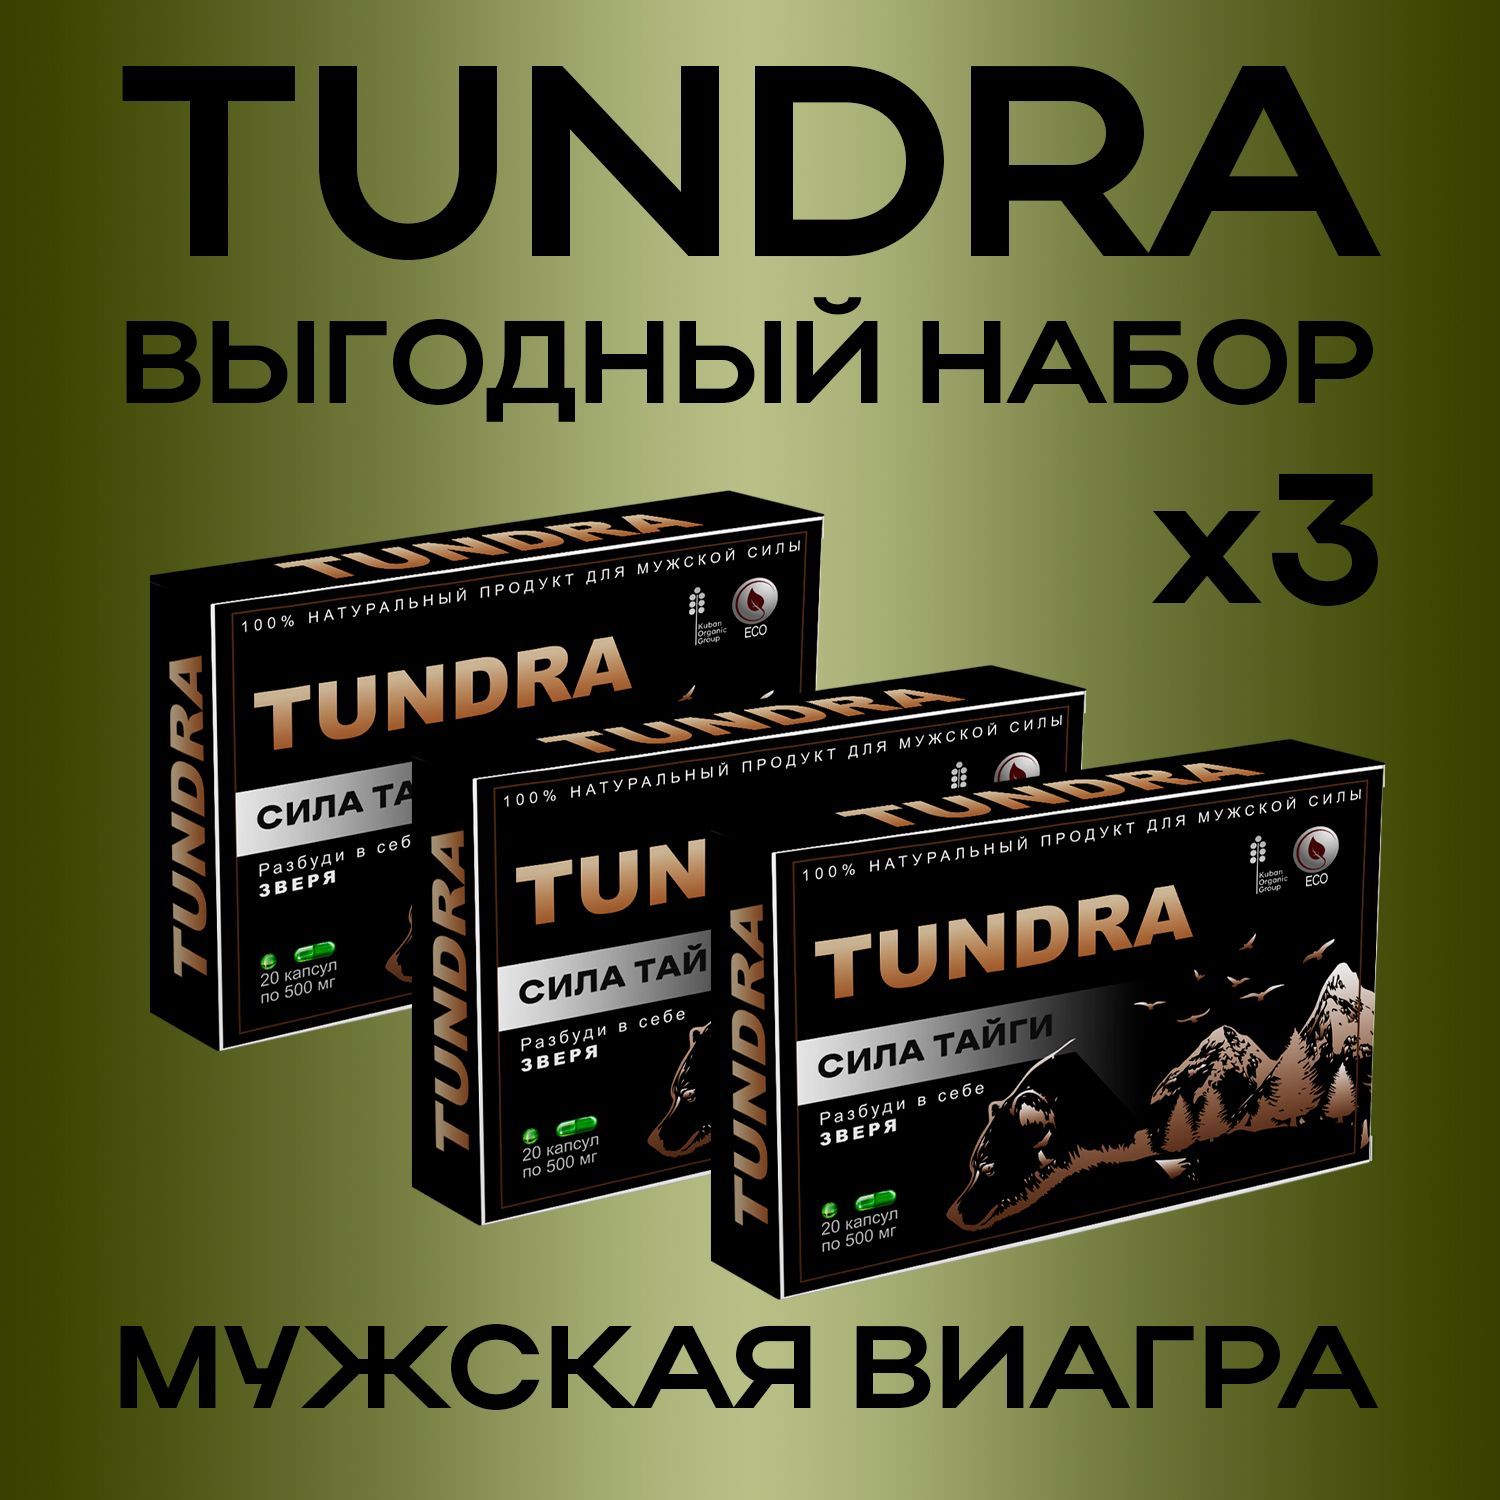 Препарат тундра для мужчин отзывы. Tundra сила тайги капсулы. Тундра для потенции купить. Тундра для потенции цена в аптеках. Тундра для потенции купить в Москве.